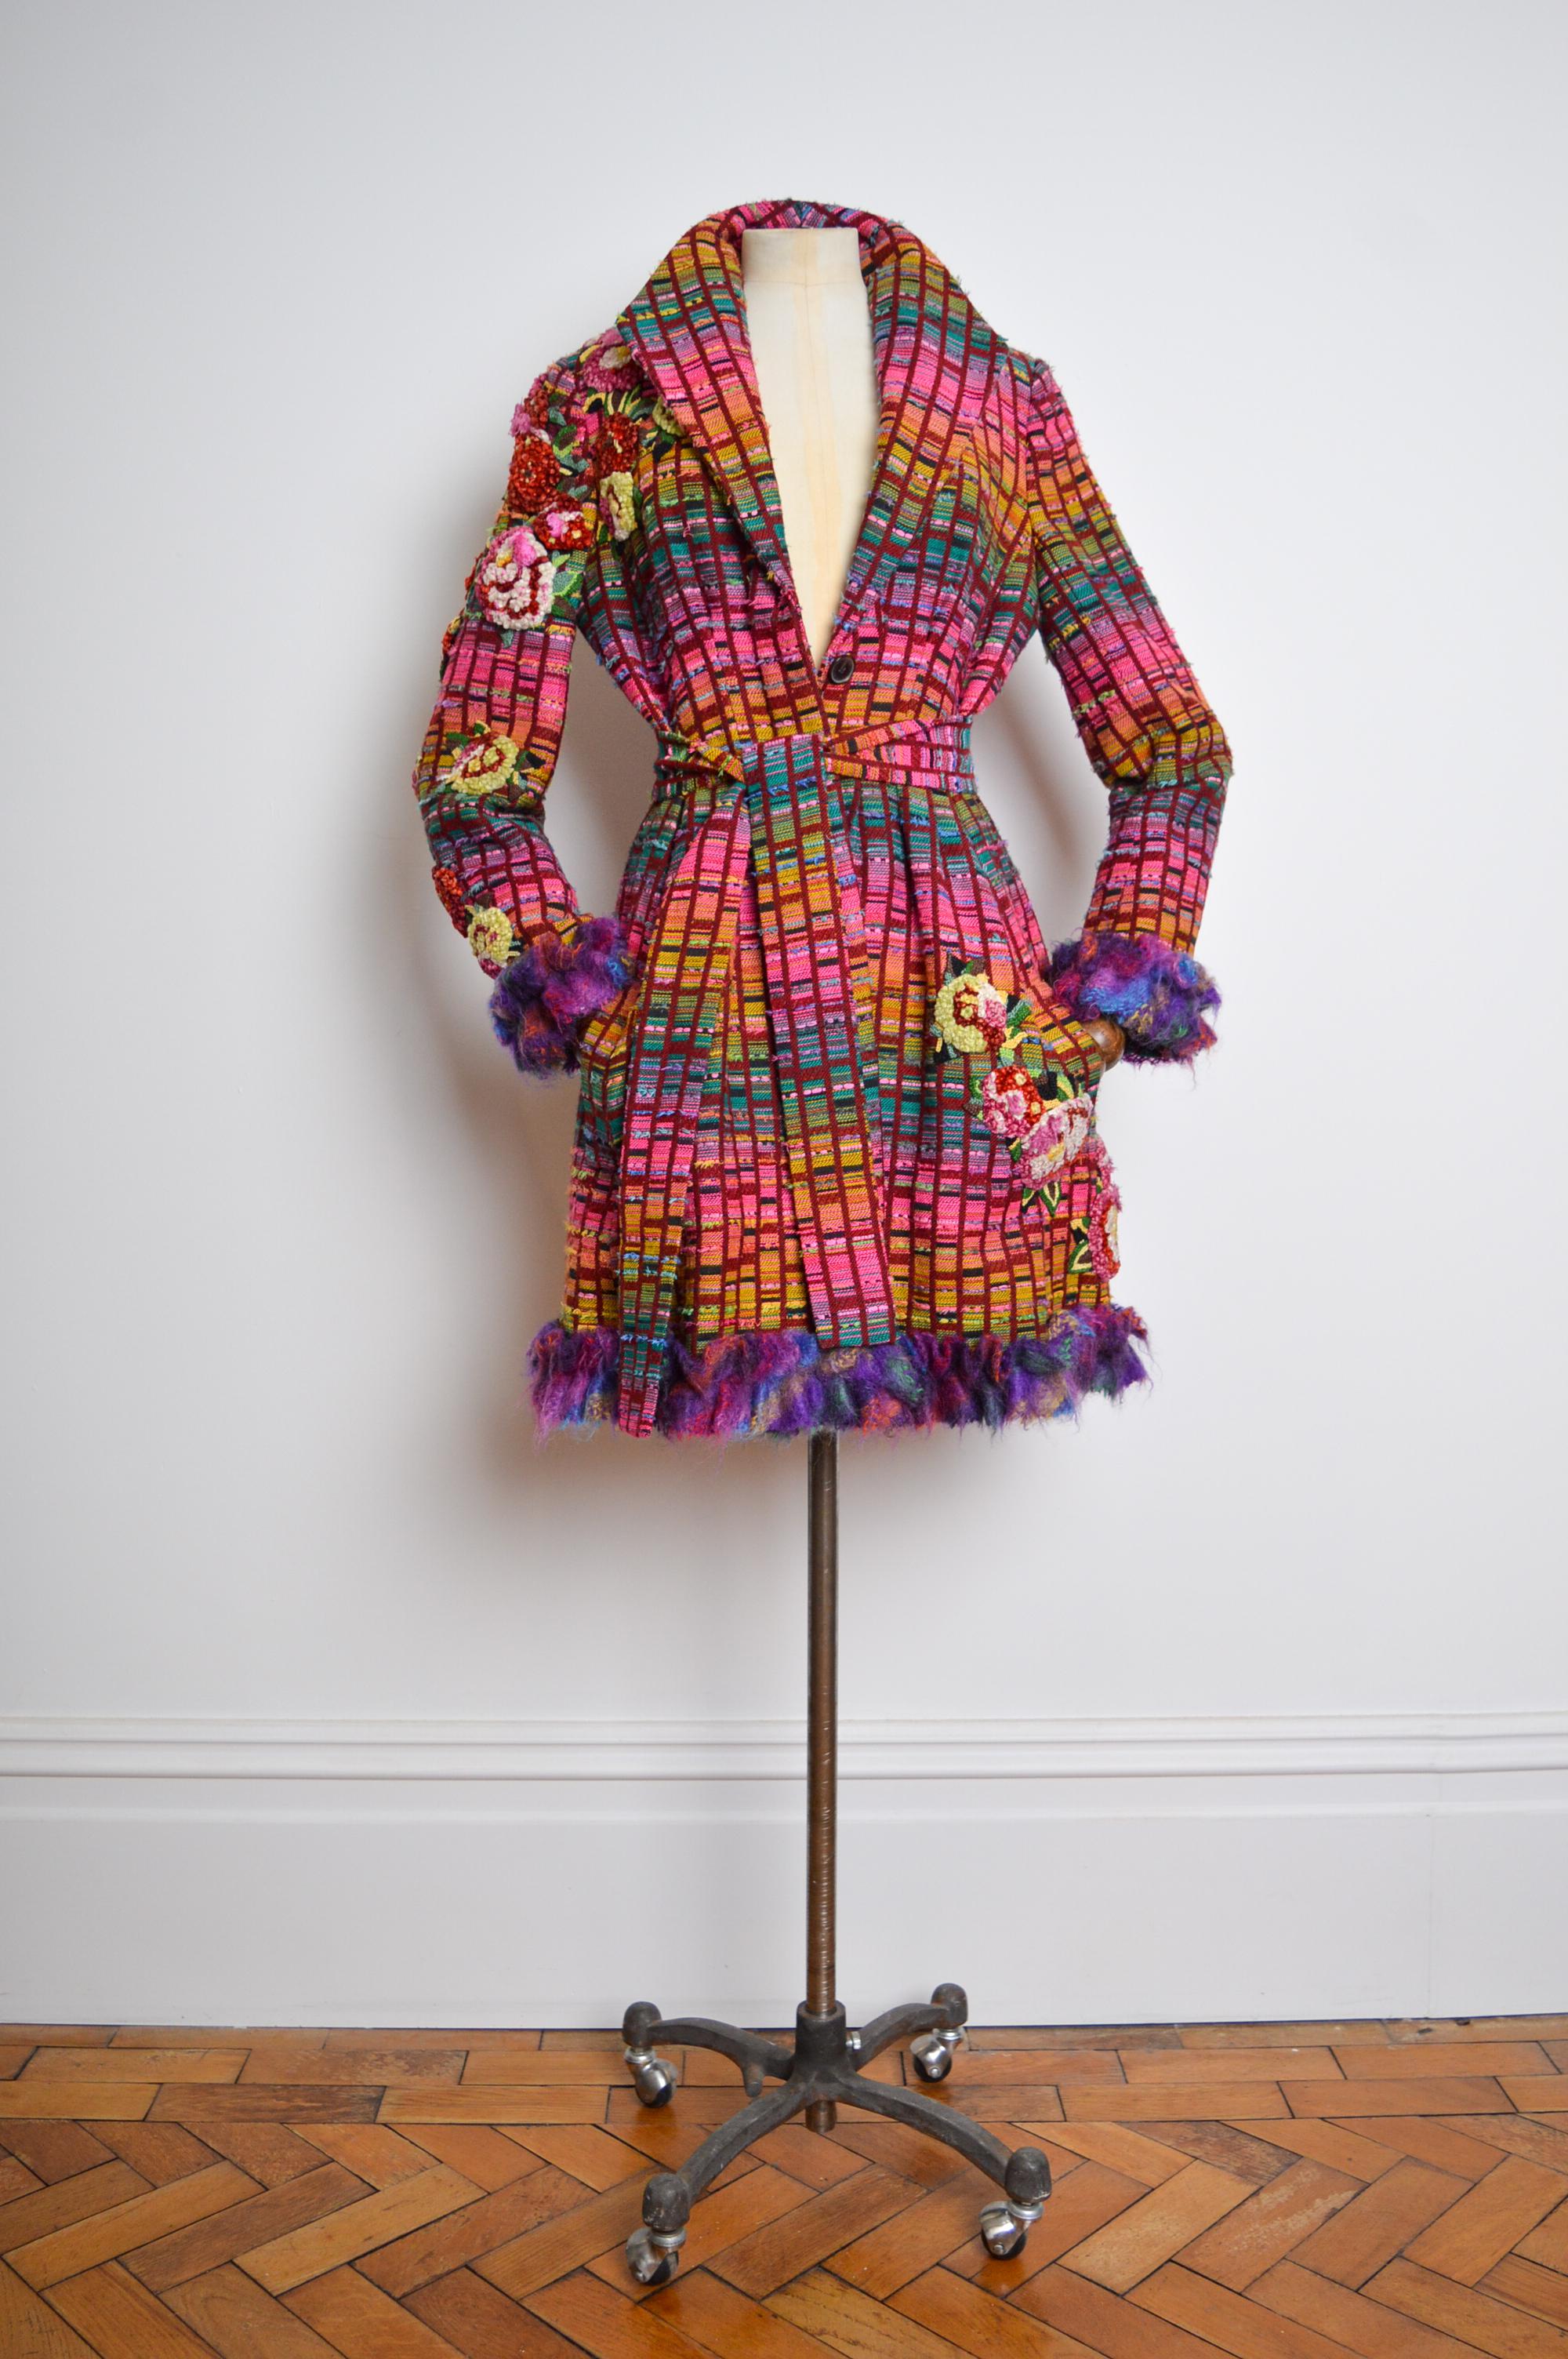 Superb Tweed Mathew Williamson Jewel Tone Embroidered Embellished Coat 10